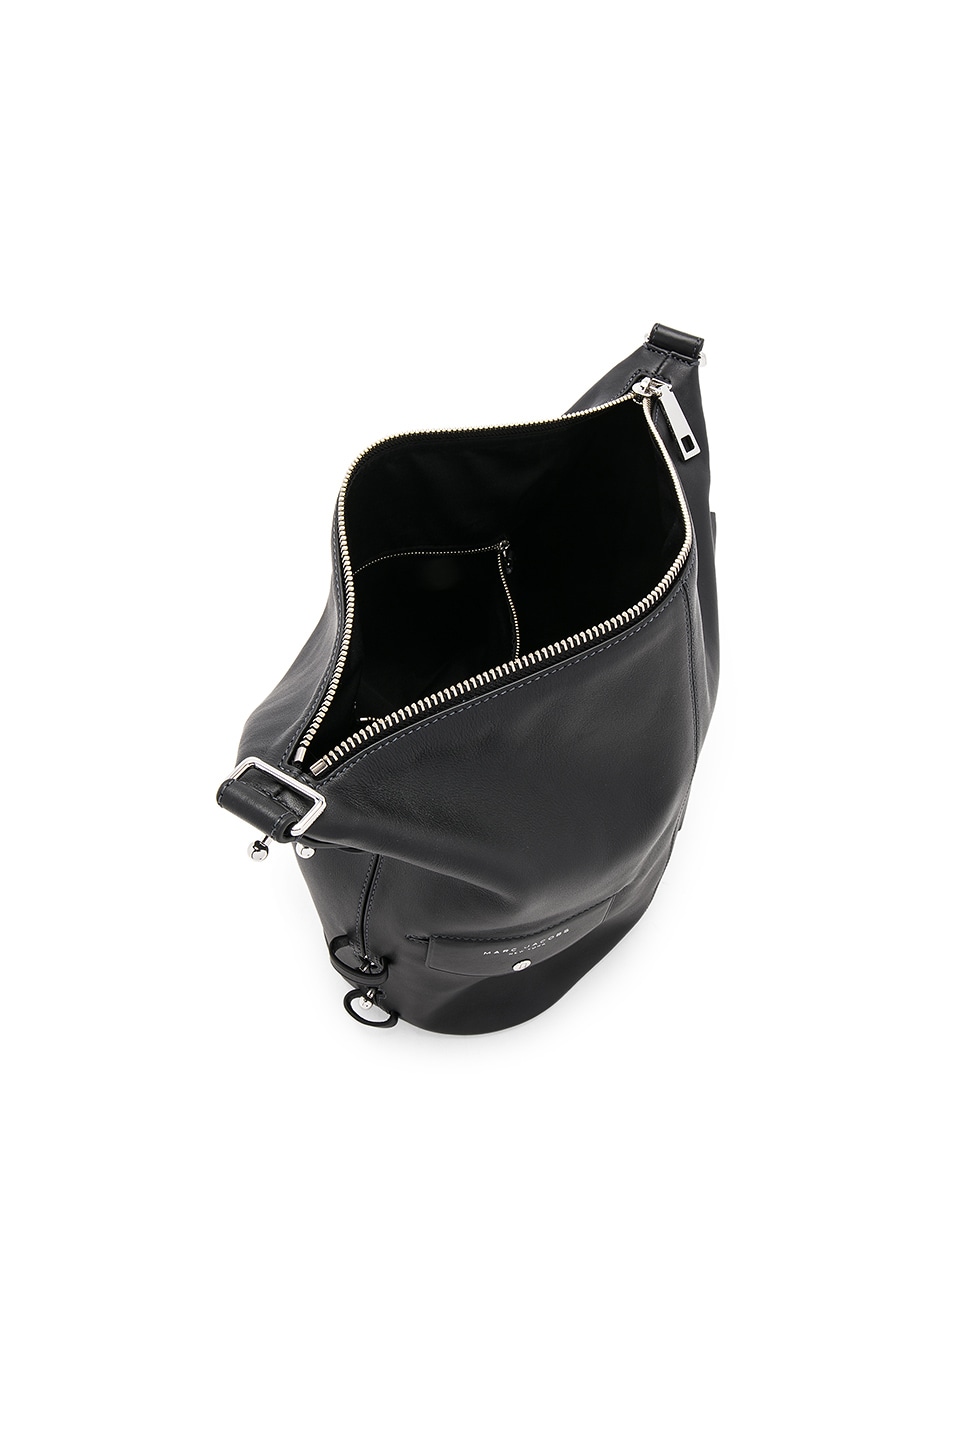 MARC JACOBS The Sling Convertible Shoulder Bag in Black | ModeSens